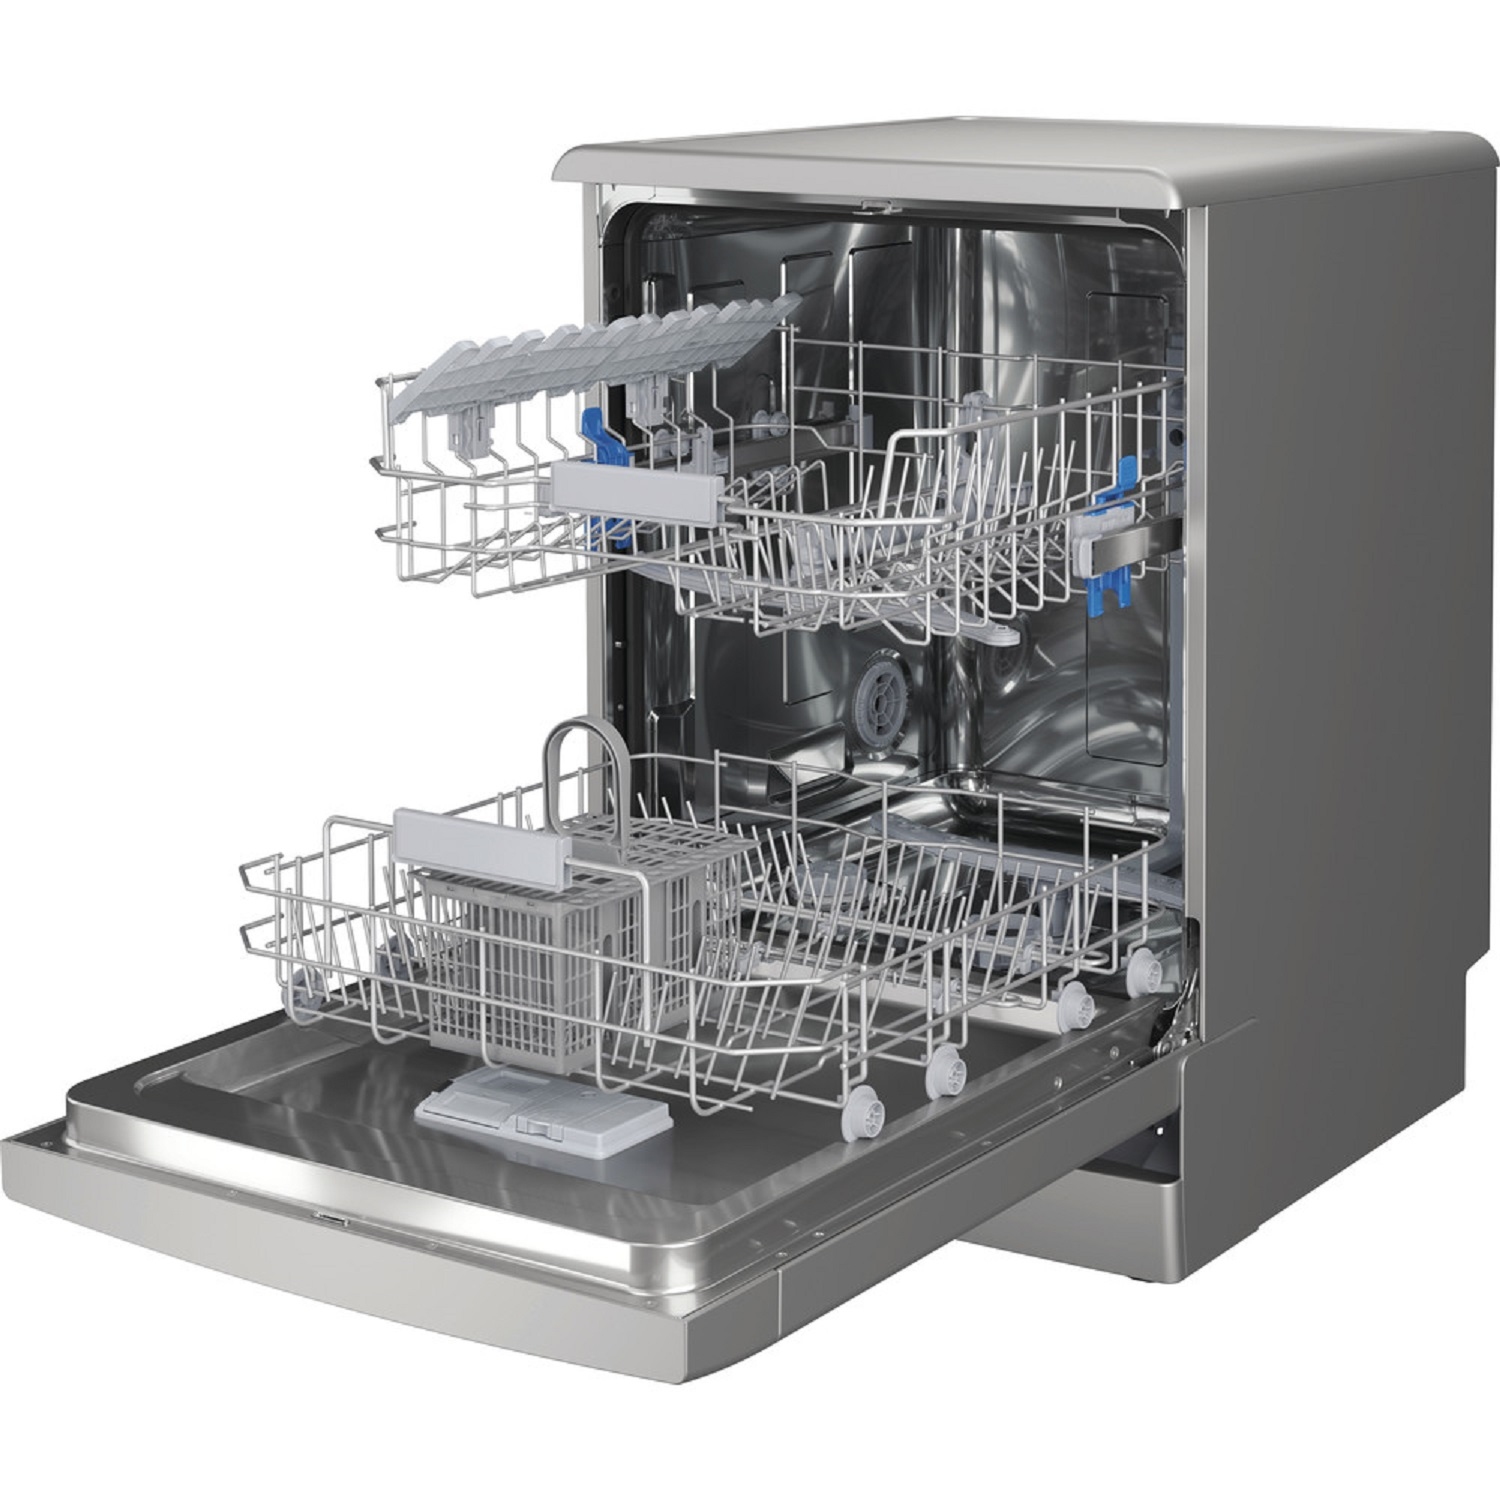 Indesit Fullsize Dishwasher 60cm Silver - 1